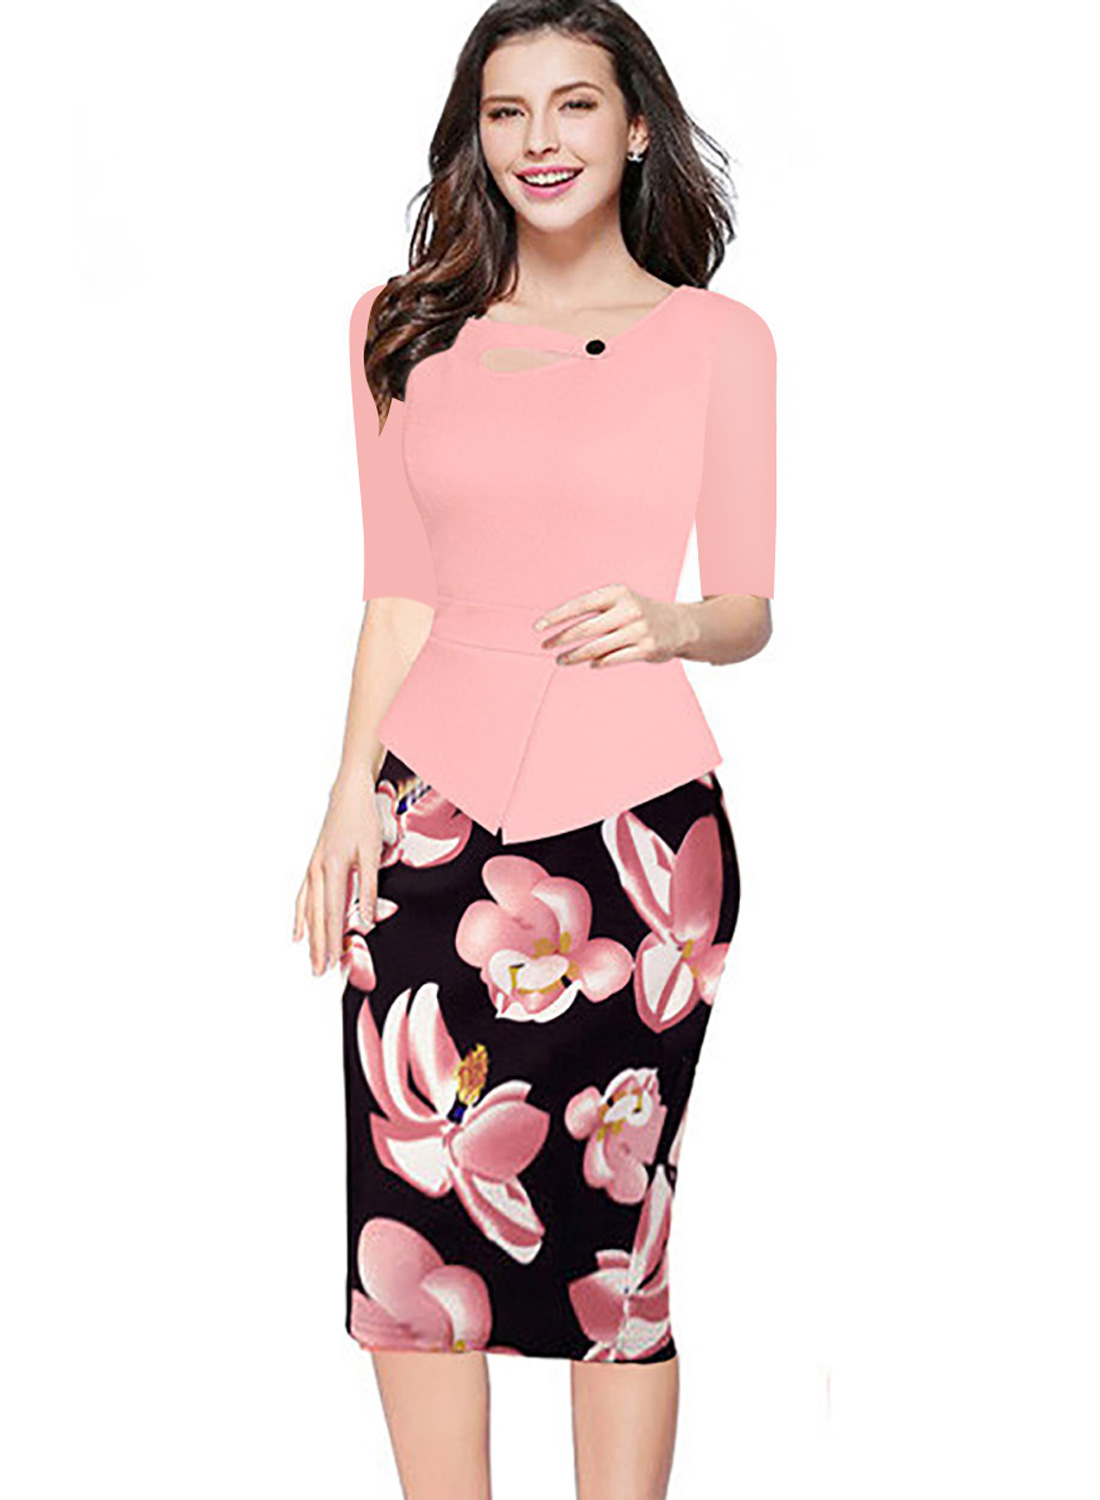 Women Floral Print Patchwork Pencil Dress Half/Long Sleeve Plus Size Slim Work OL Office Bodycon Party Dress 14#